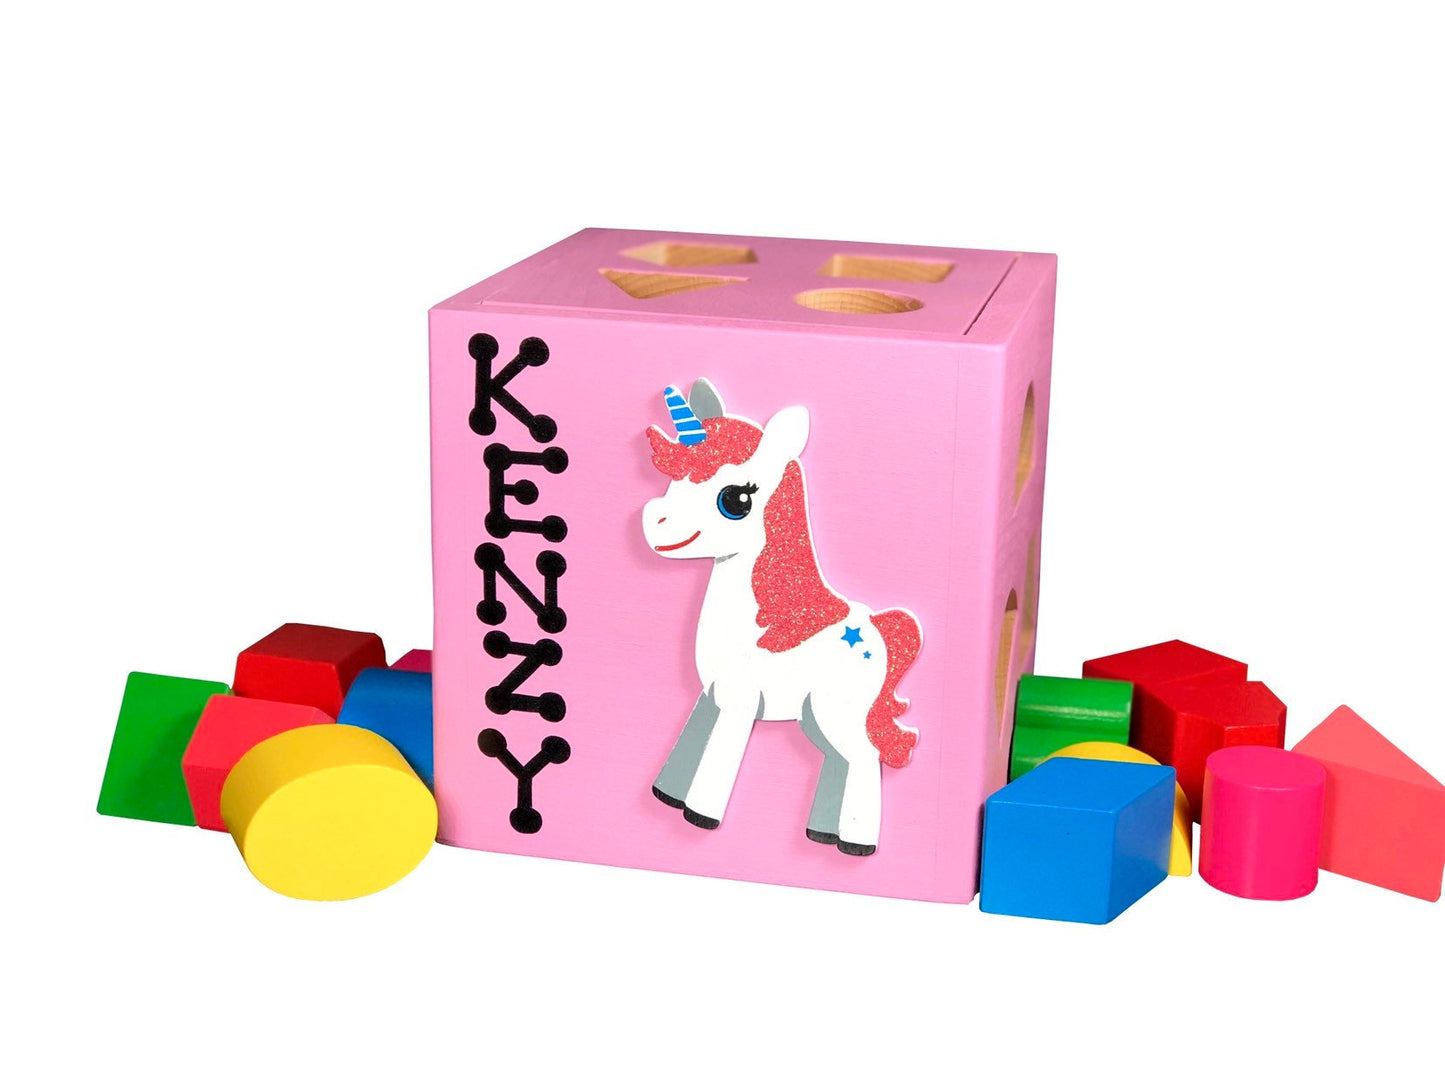 Unicorn baby gift / New baby gift idea / shape sorting box